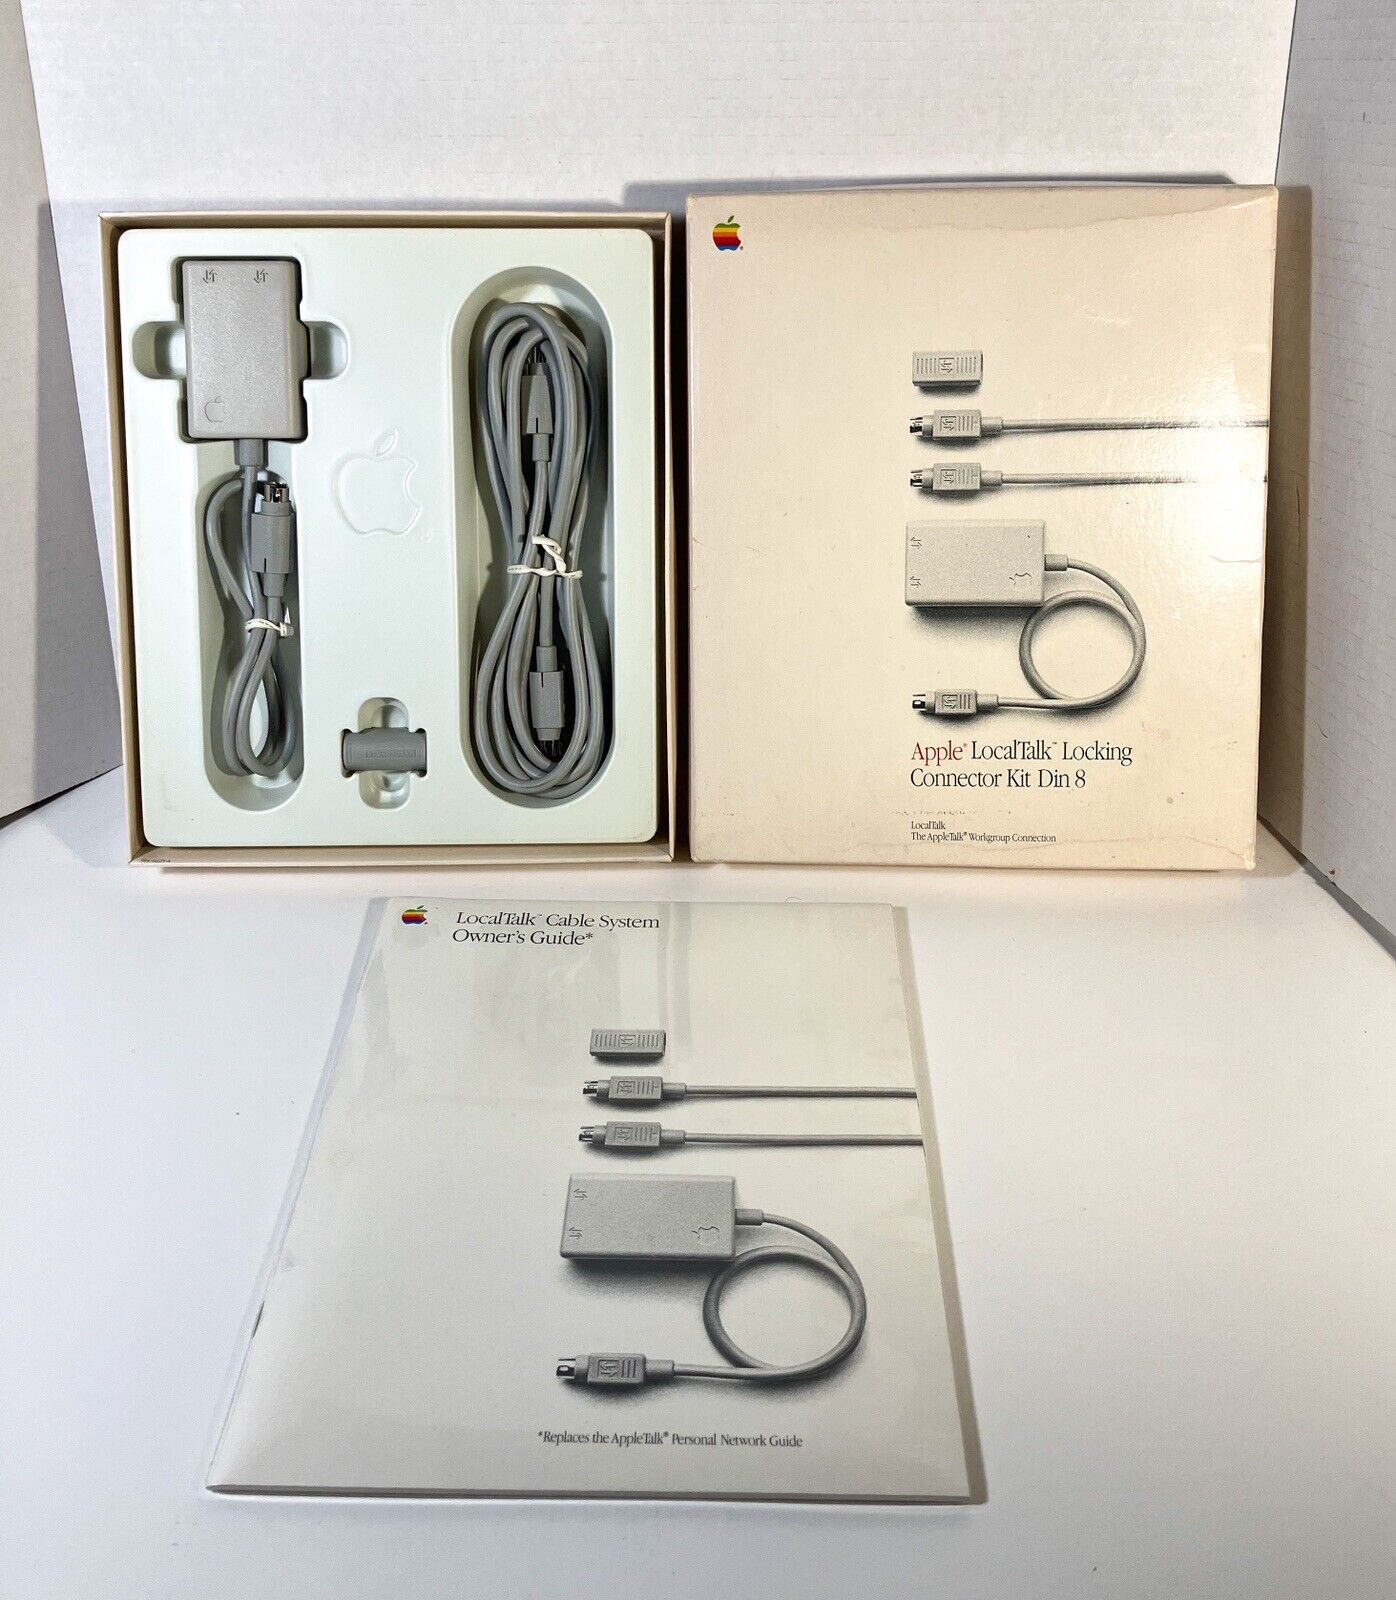 1987 Apple Macintosh M2068 LocalTalk Locking Connector Kit Din 8